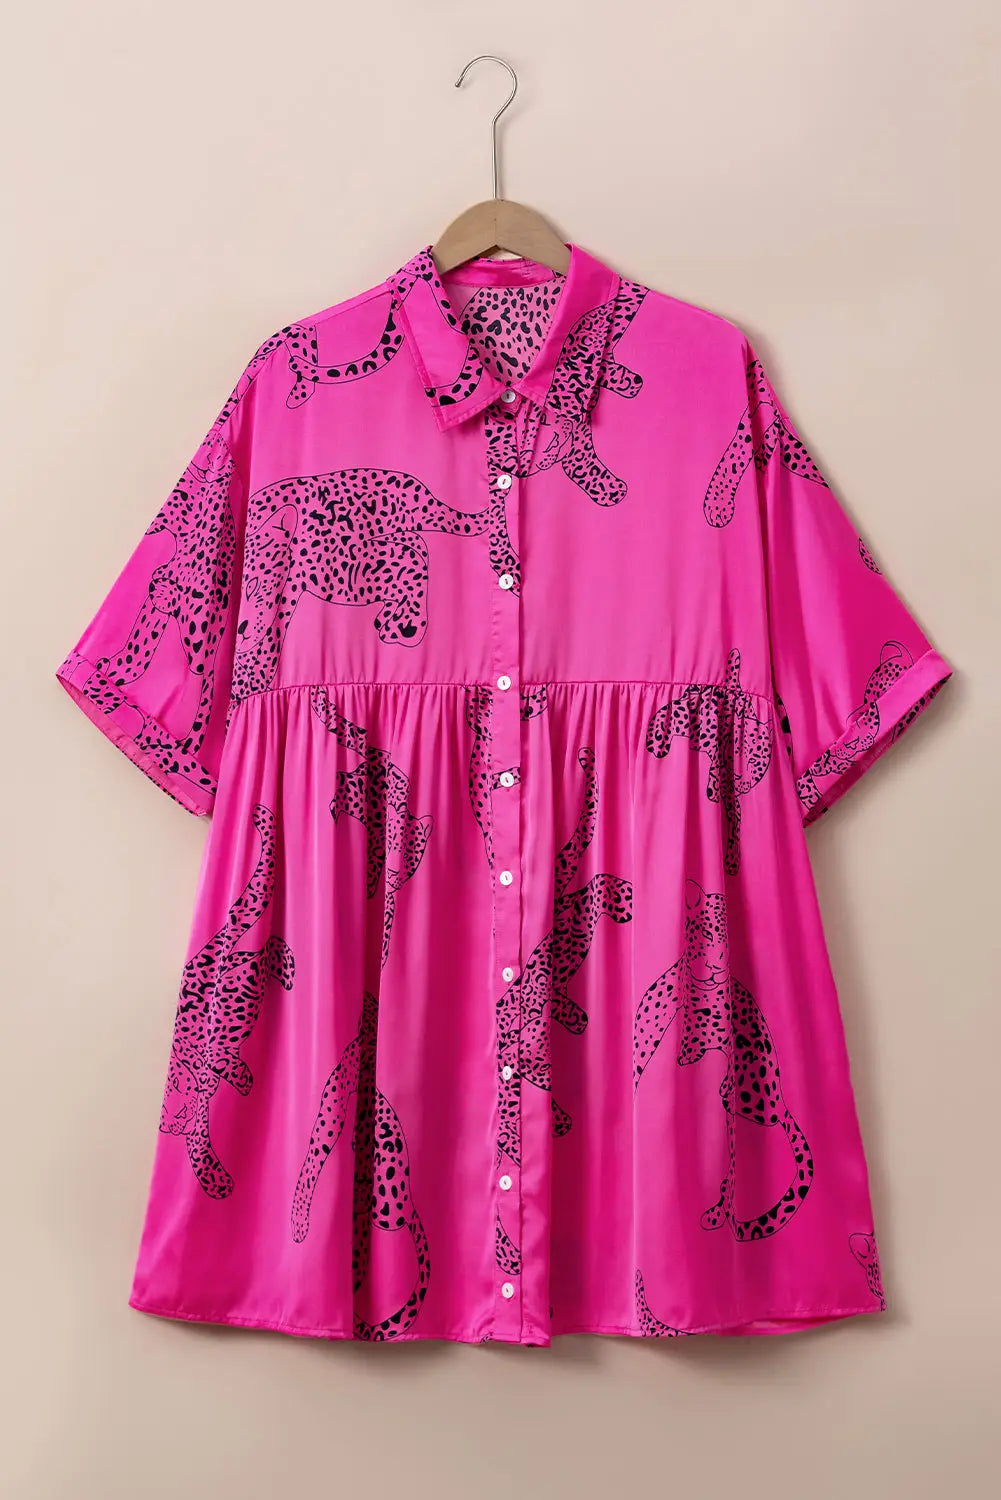 Rose red cheetah print bell sleeve mini shirt dress - dresses